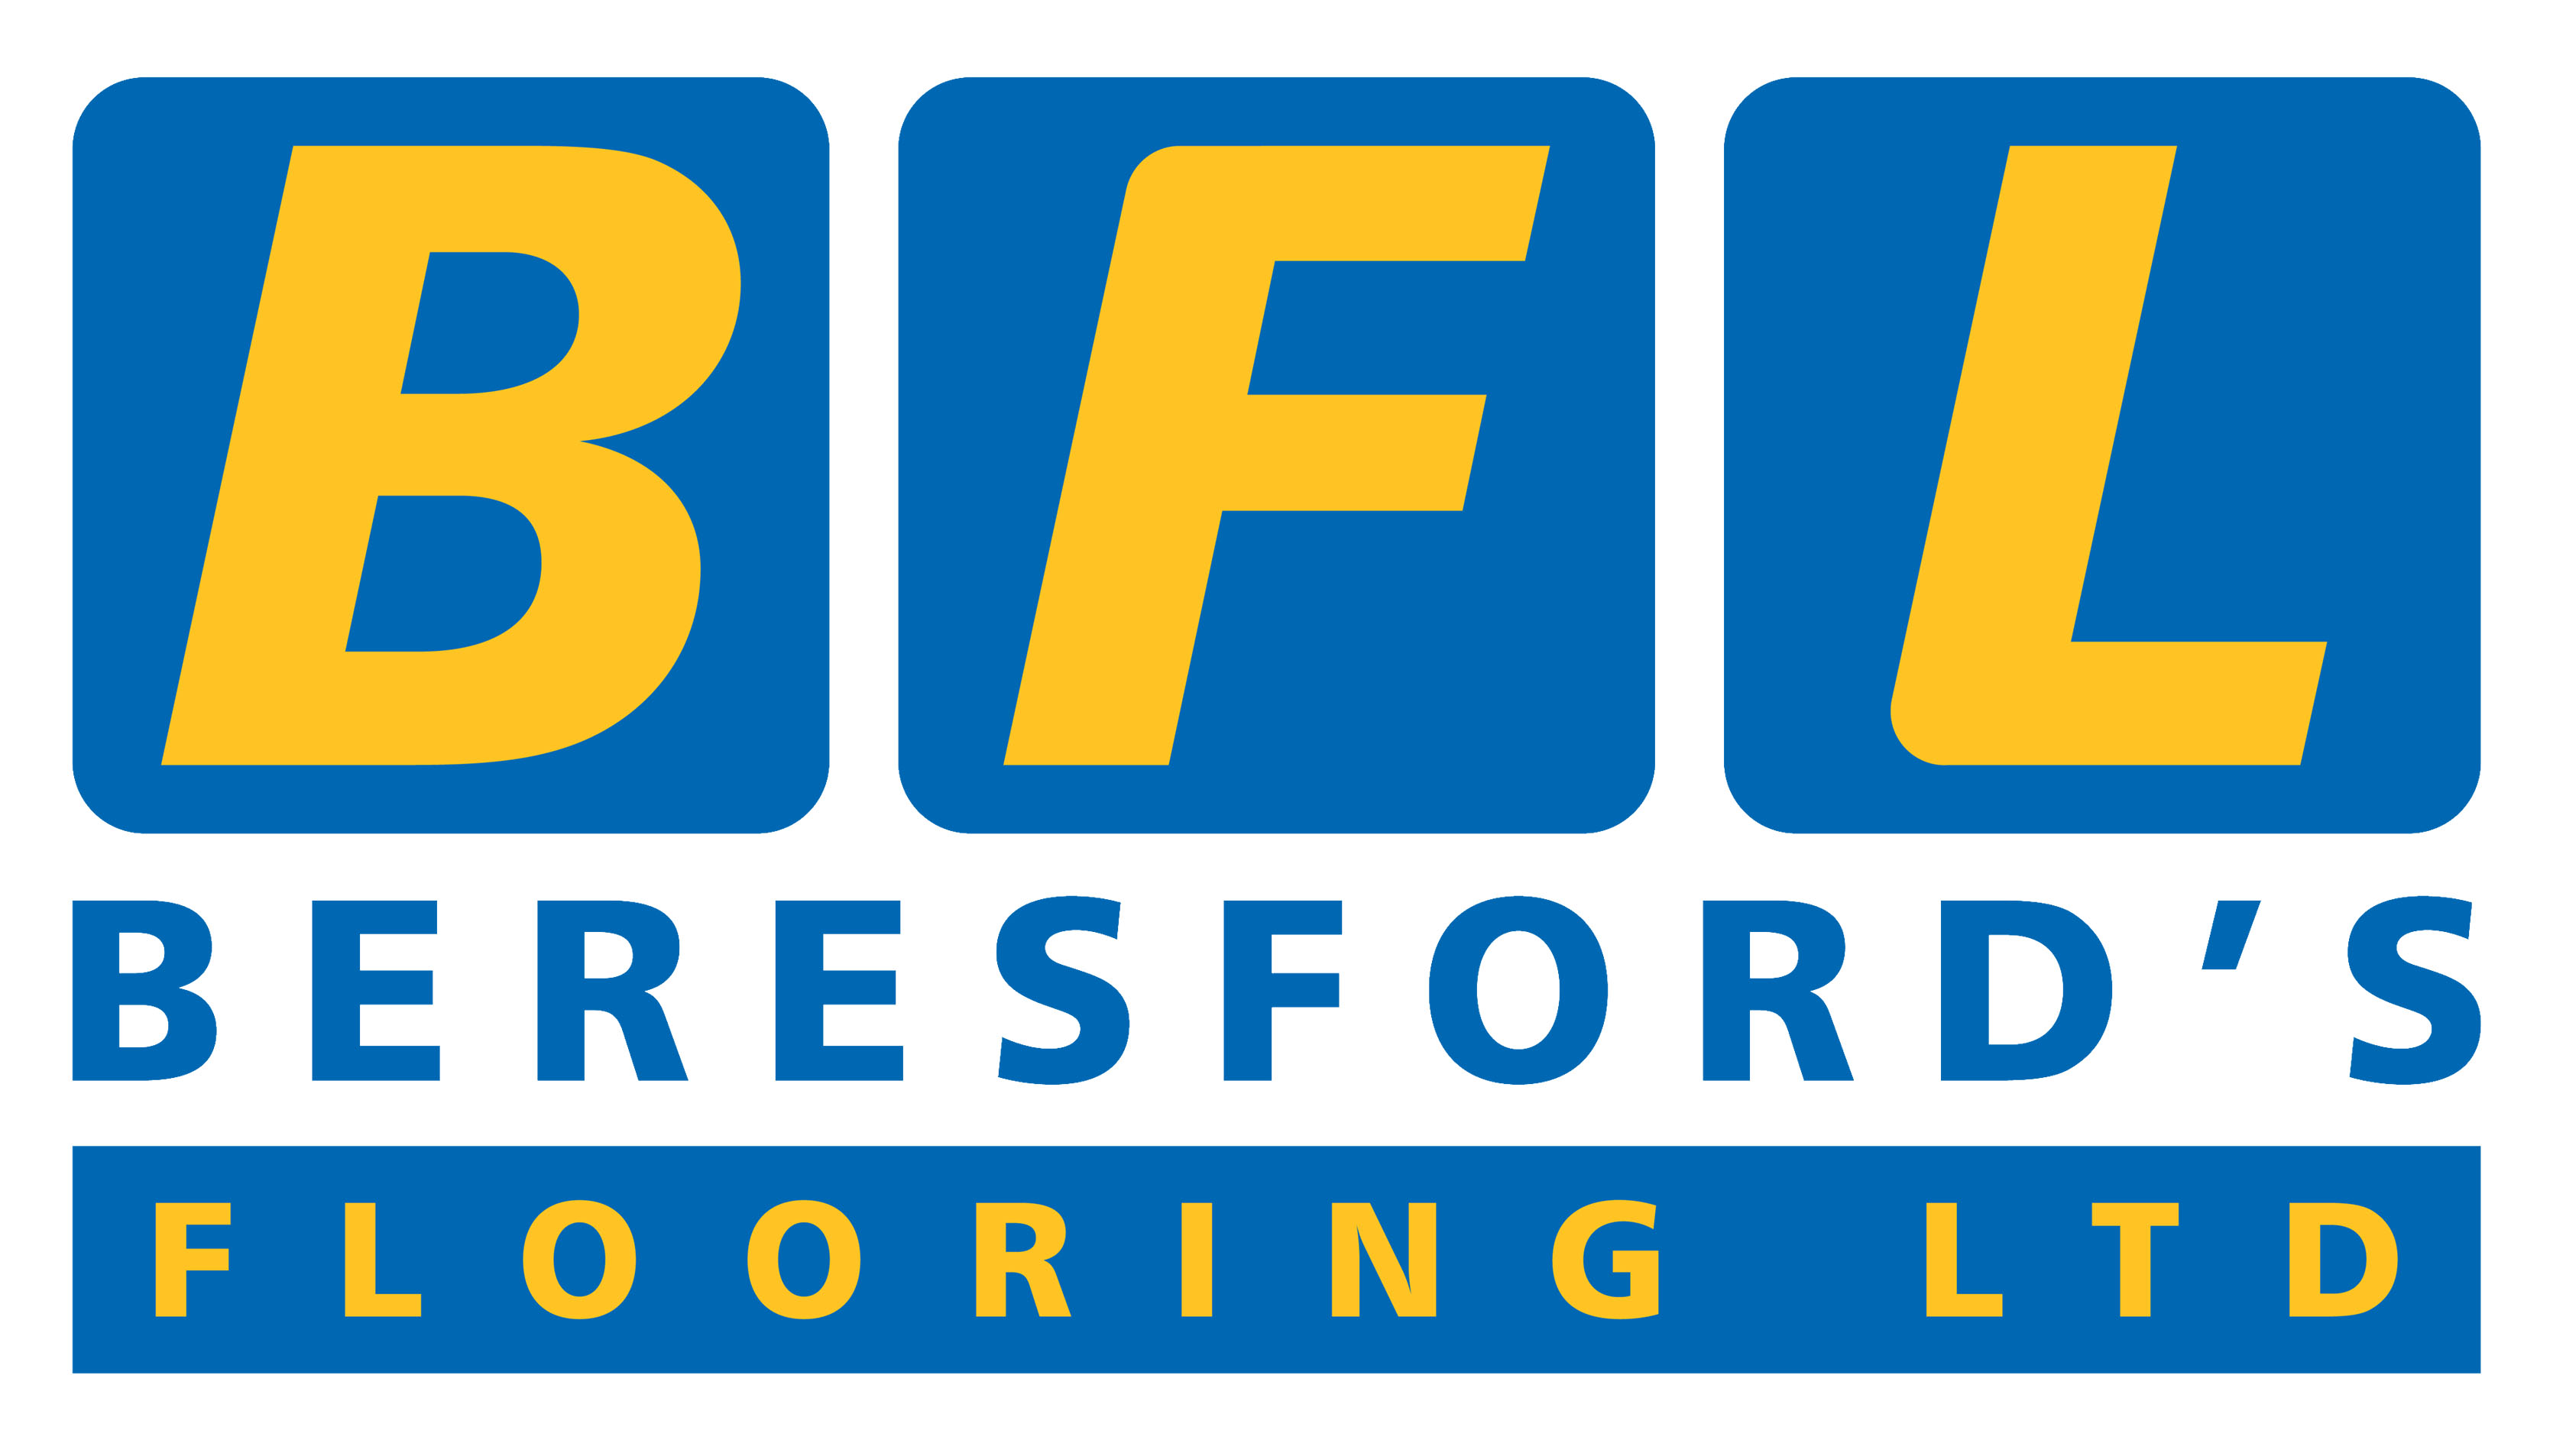 Beresford's Flooring